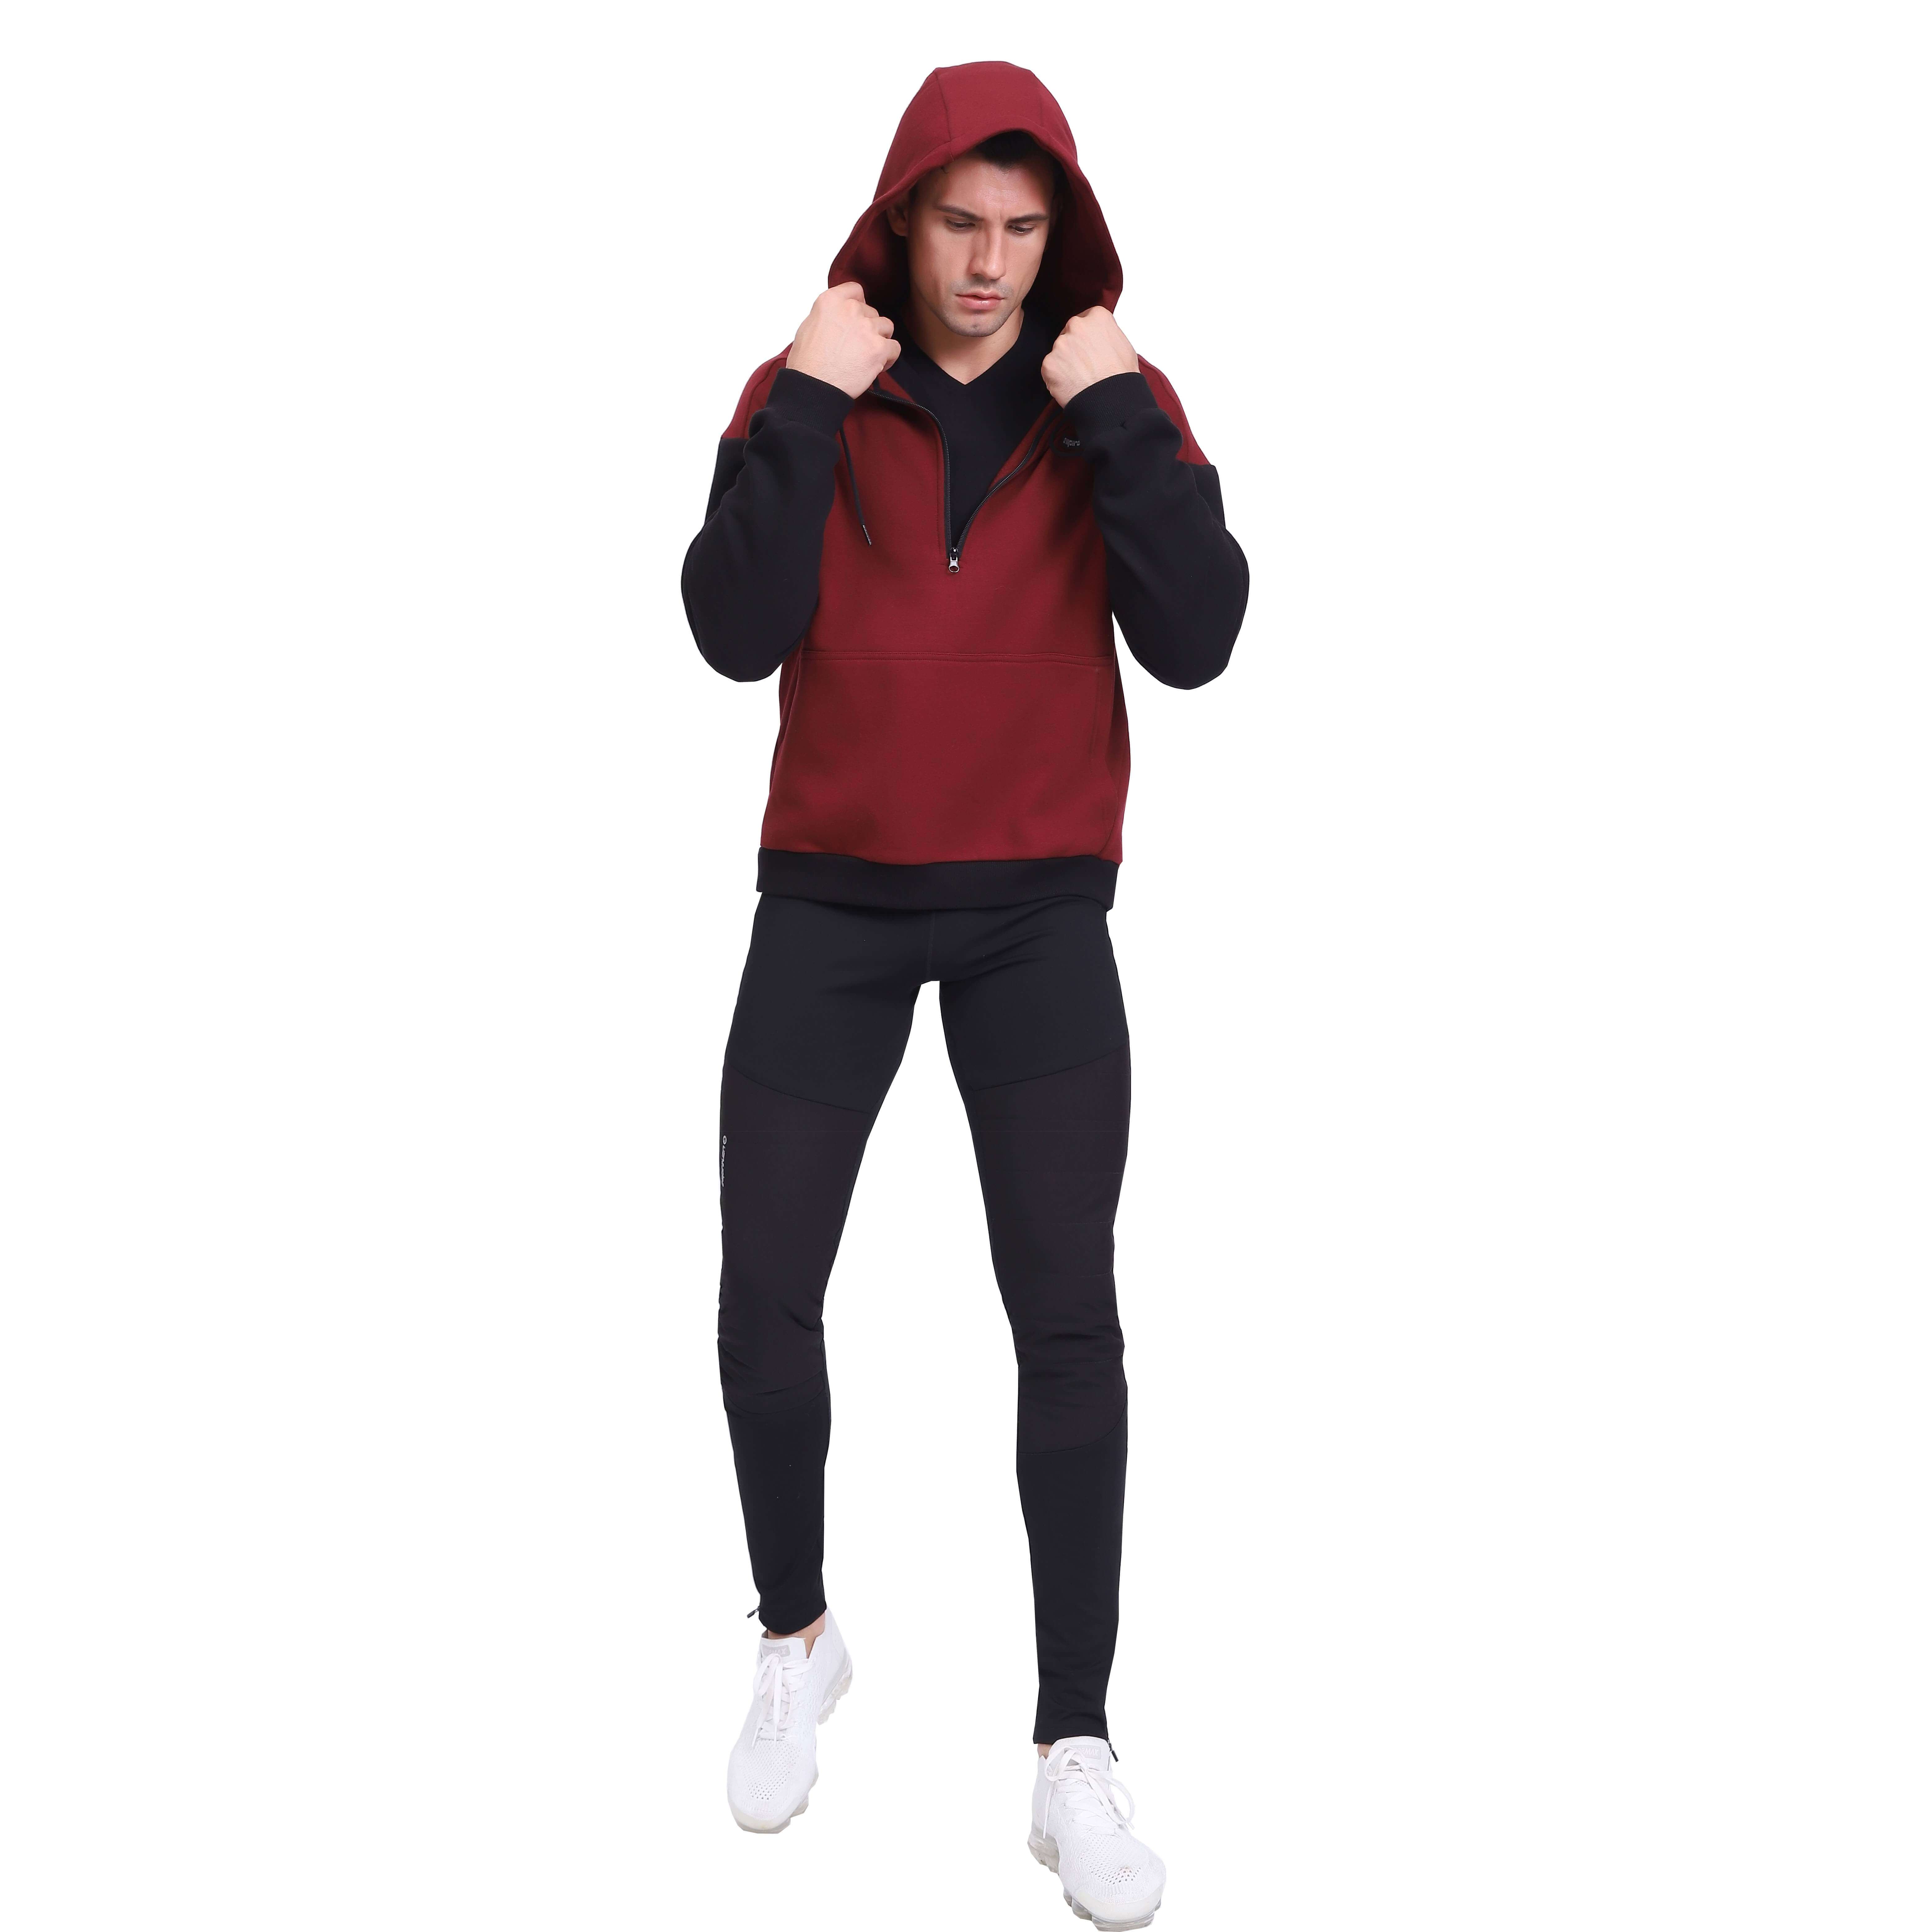 Men's Half Zipper Kangaroo Pocket Stylish Sports Sweatshirt Tops